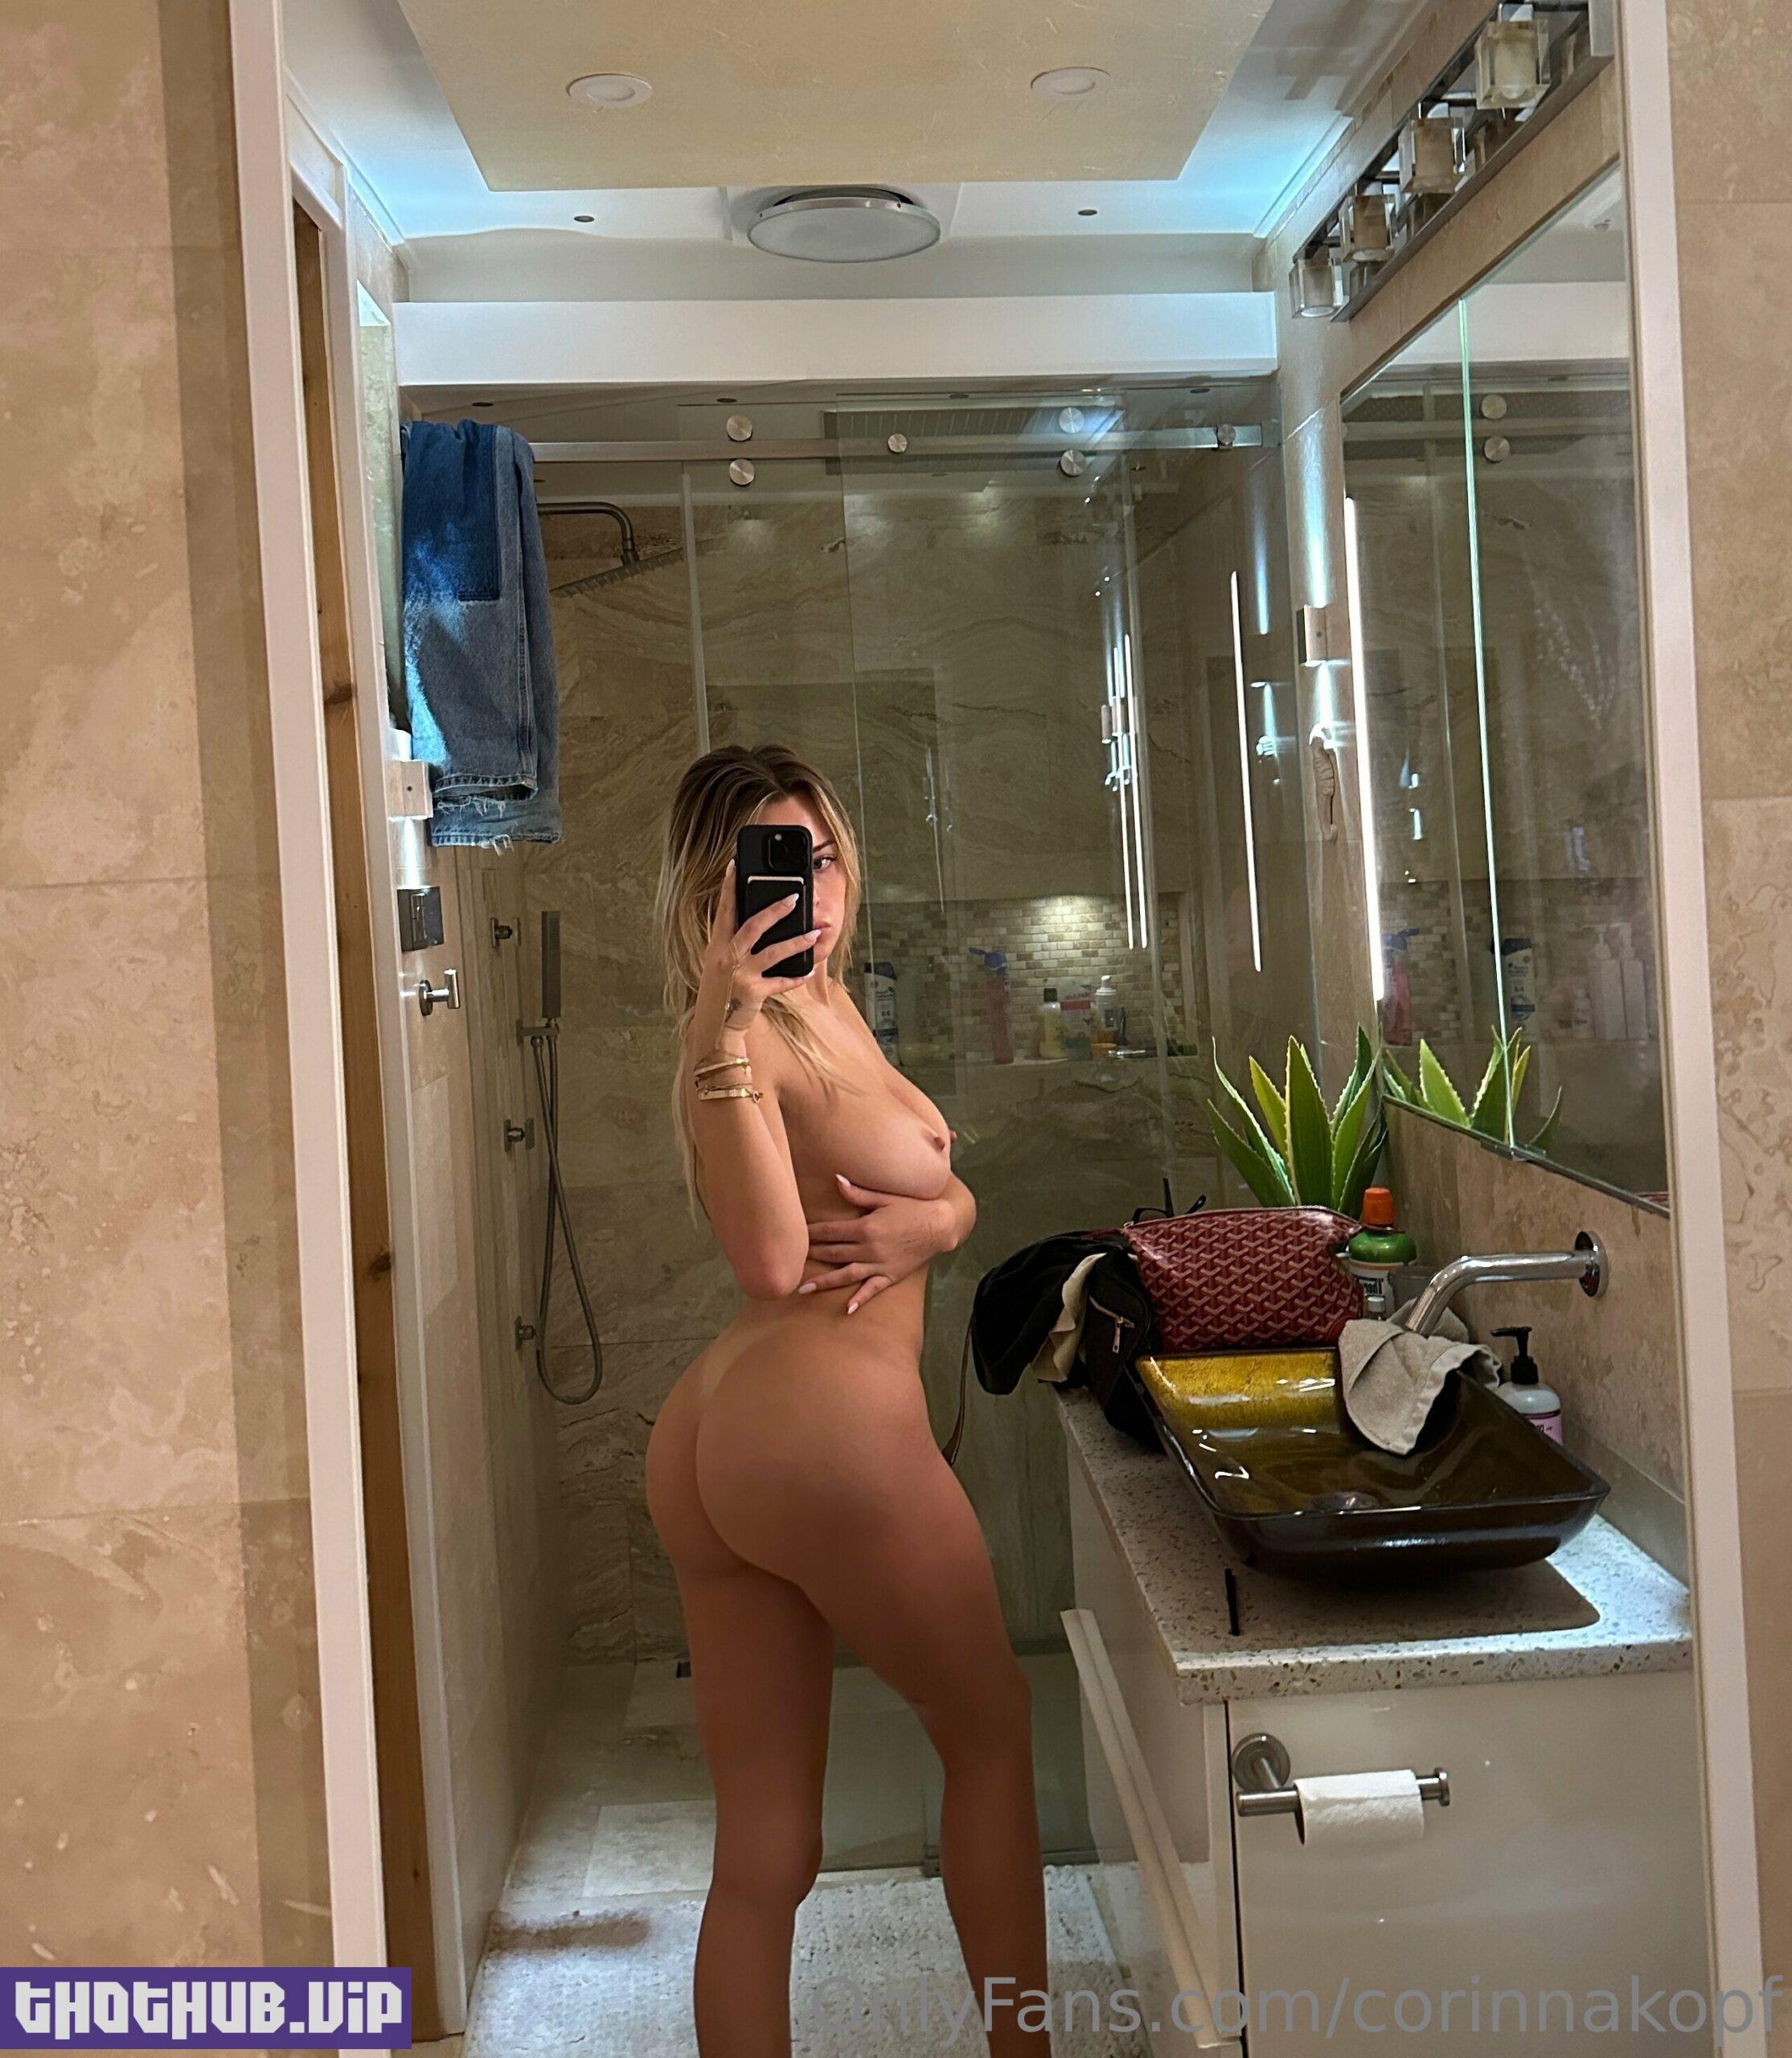 Corinna Kopf bathroom selfie